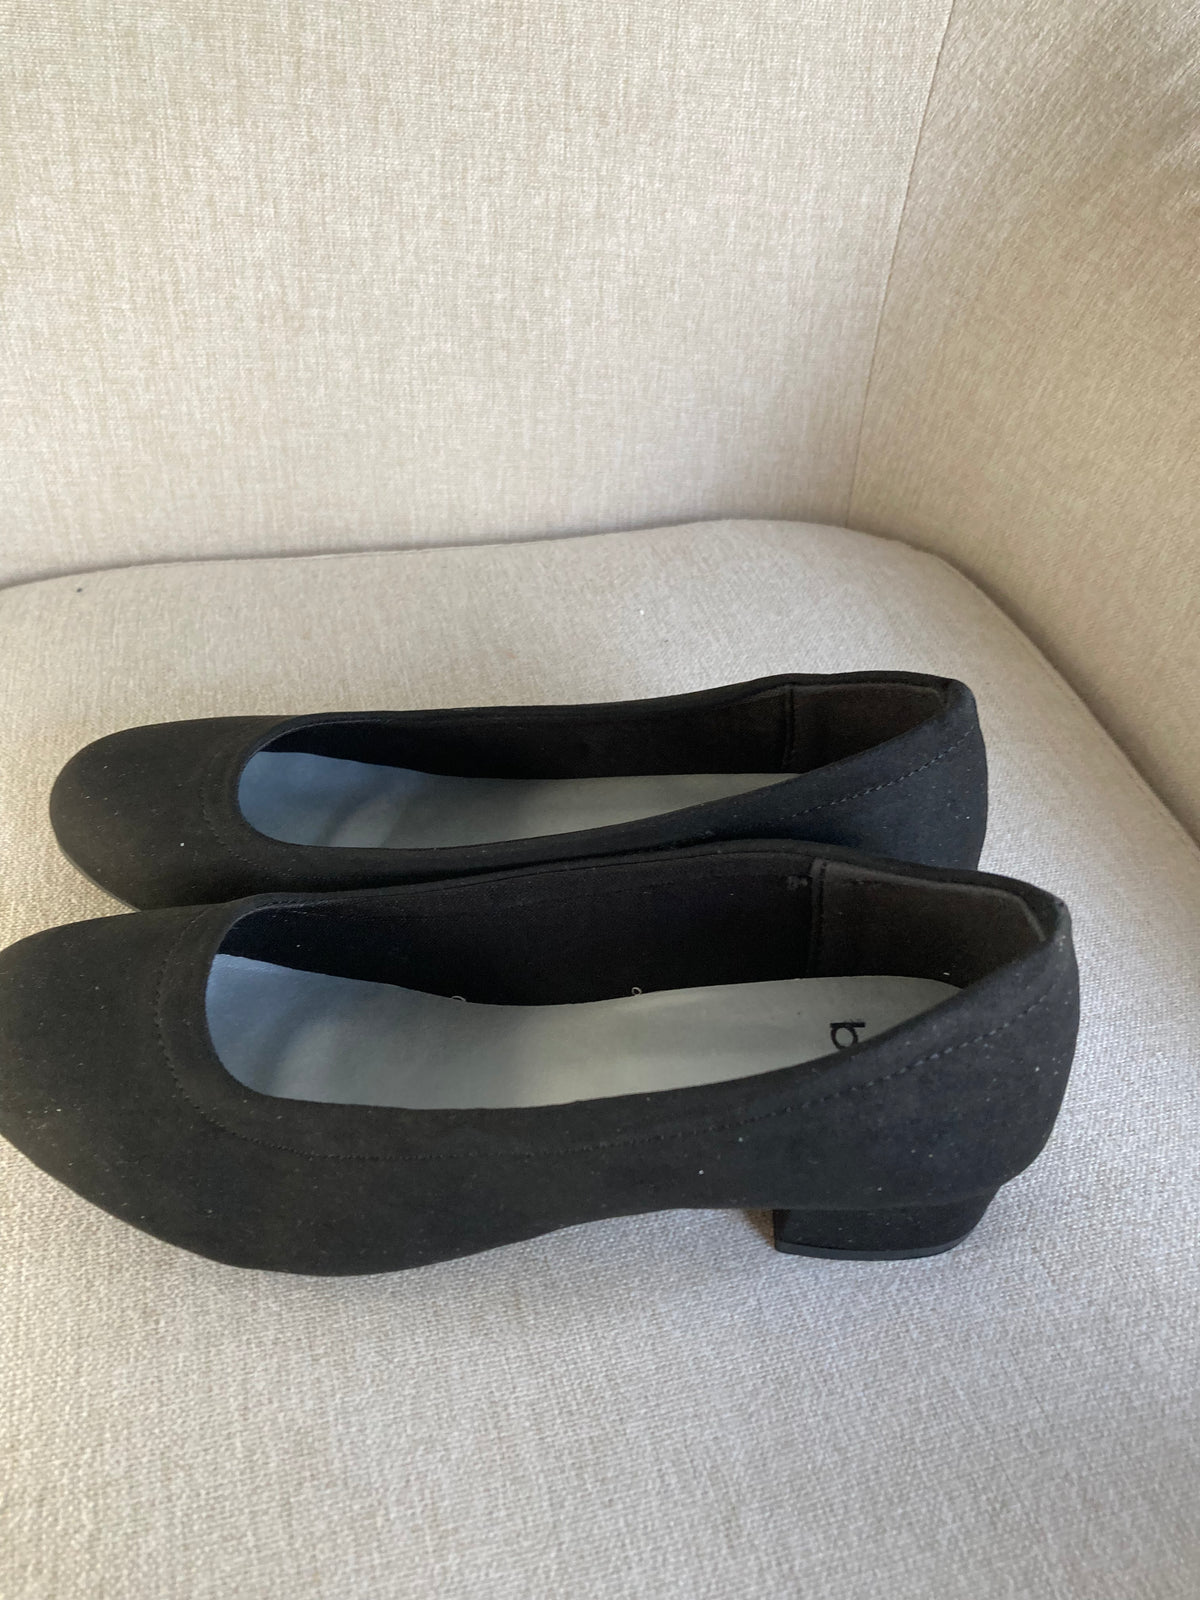 Black suede block heels by BPC size 5